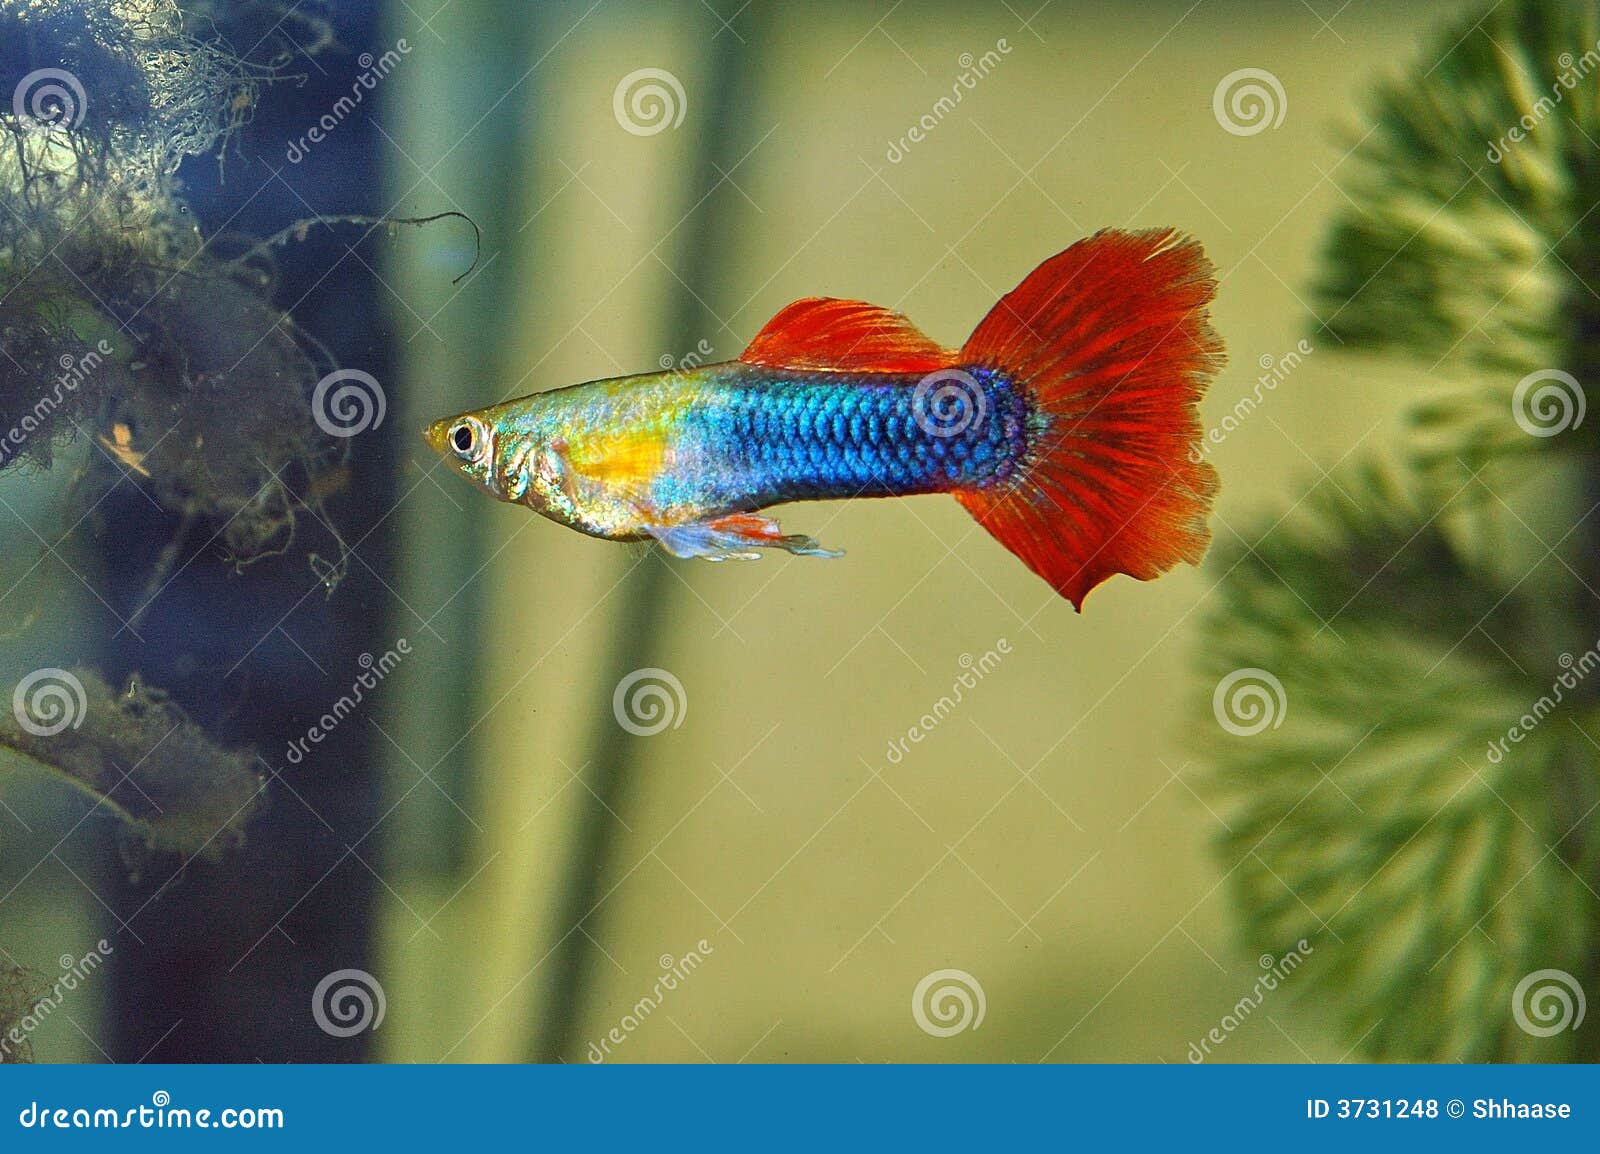 Gaji Uppkb - Swordtail Guppy - Fish Keepers Indonesia ...